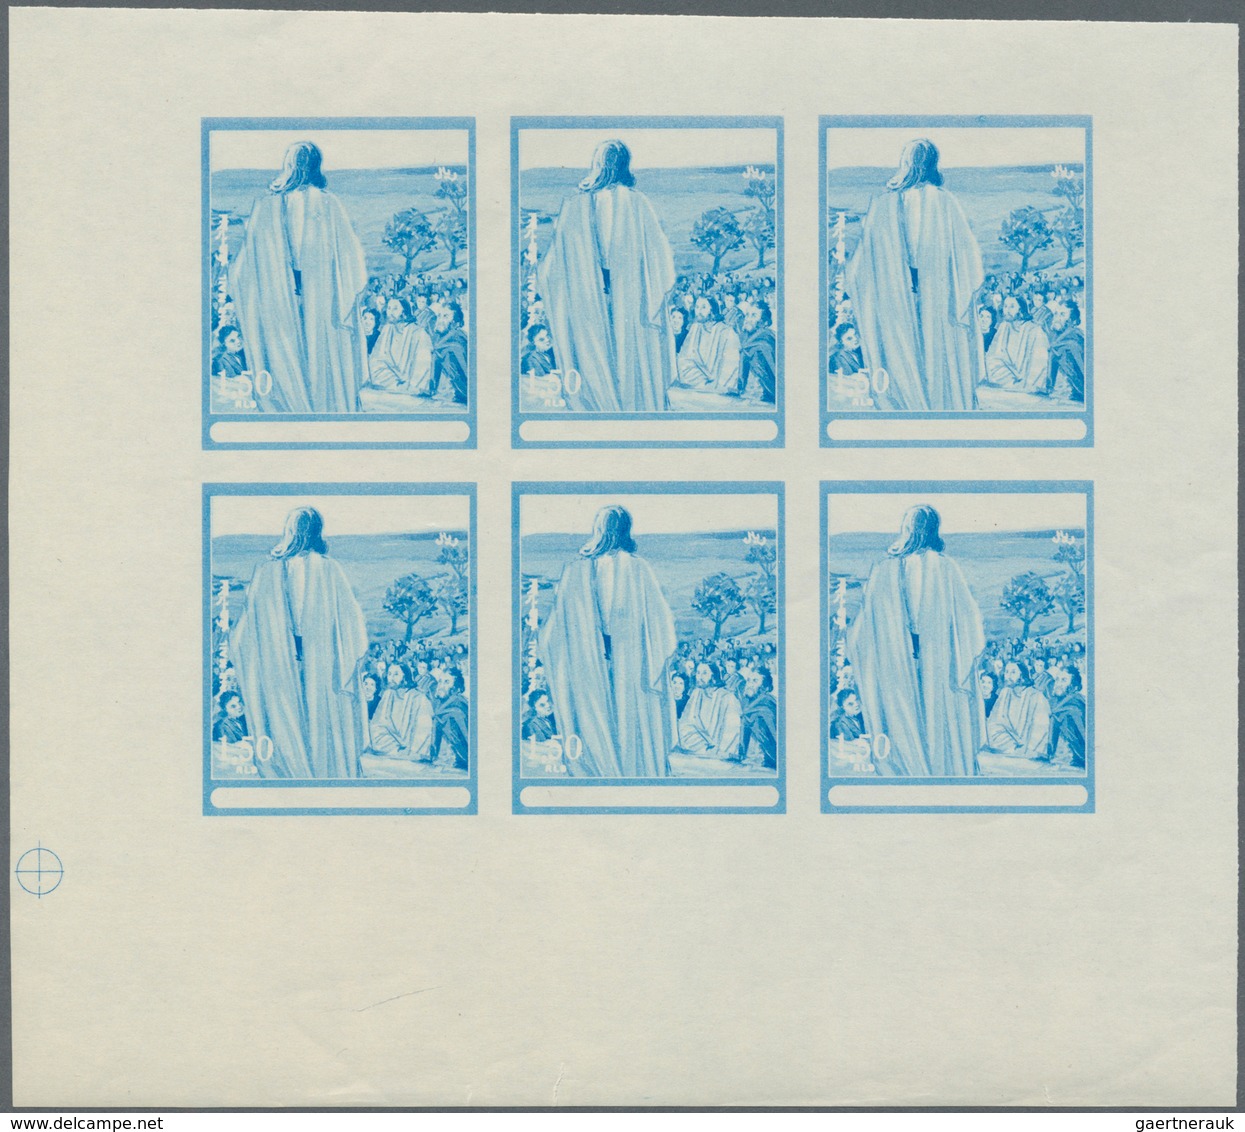 10813 Thematik: Religion / religion: 1970, Fujeira. Progressive proof (7 phases) in miniature sheets of 6